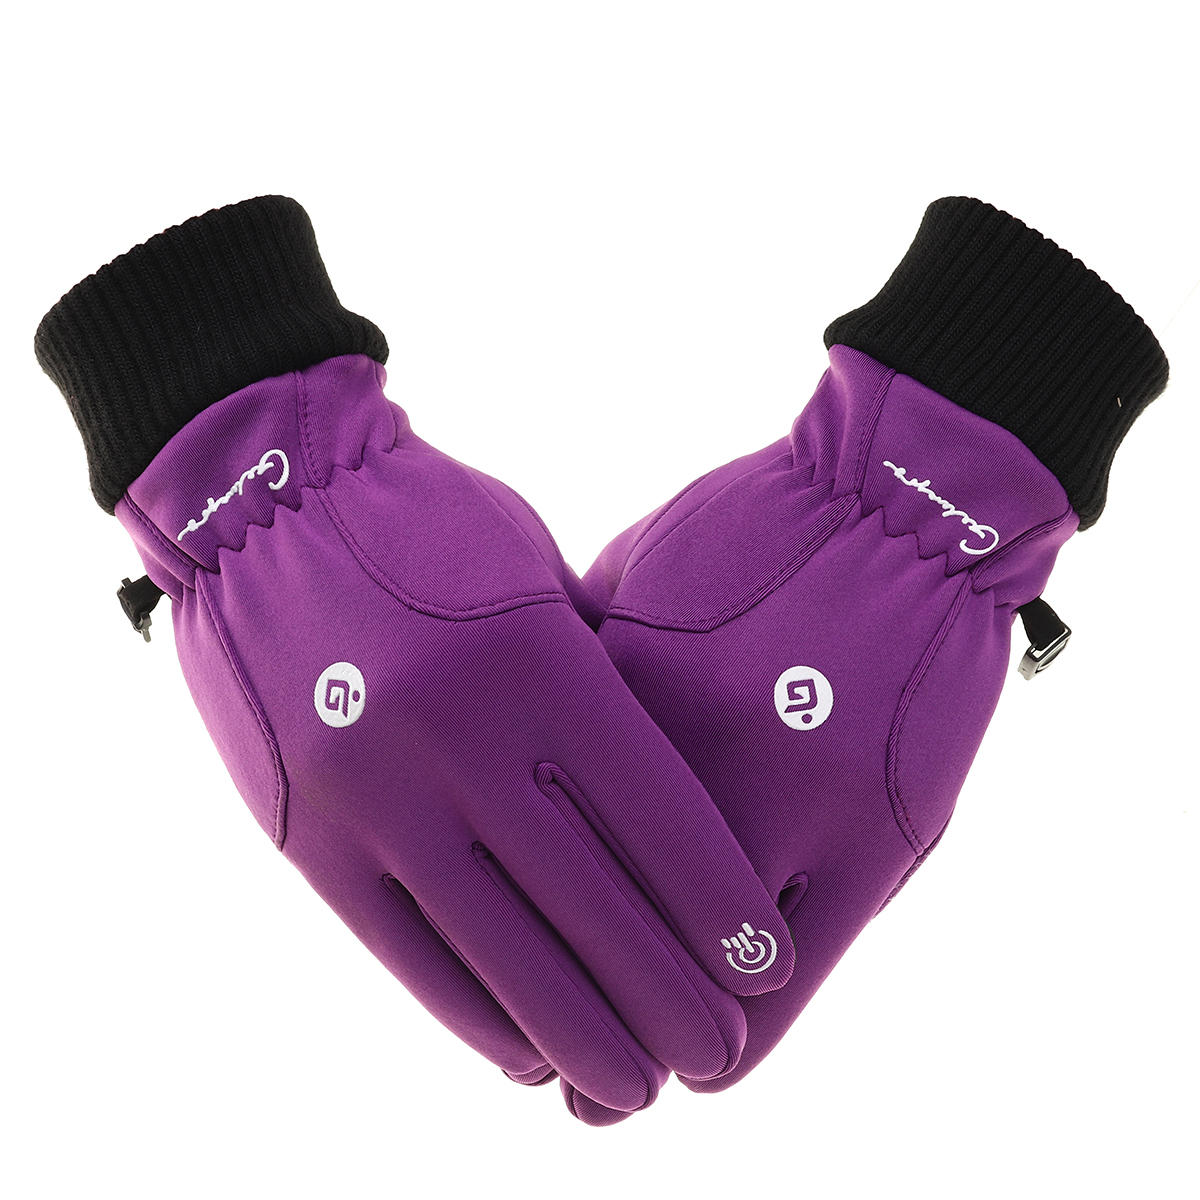 

Outdoor Gloves Winter Warm Touch Screen Windproof Riding Skiing Sports Men Women